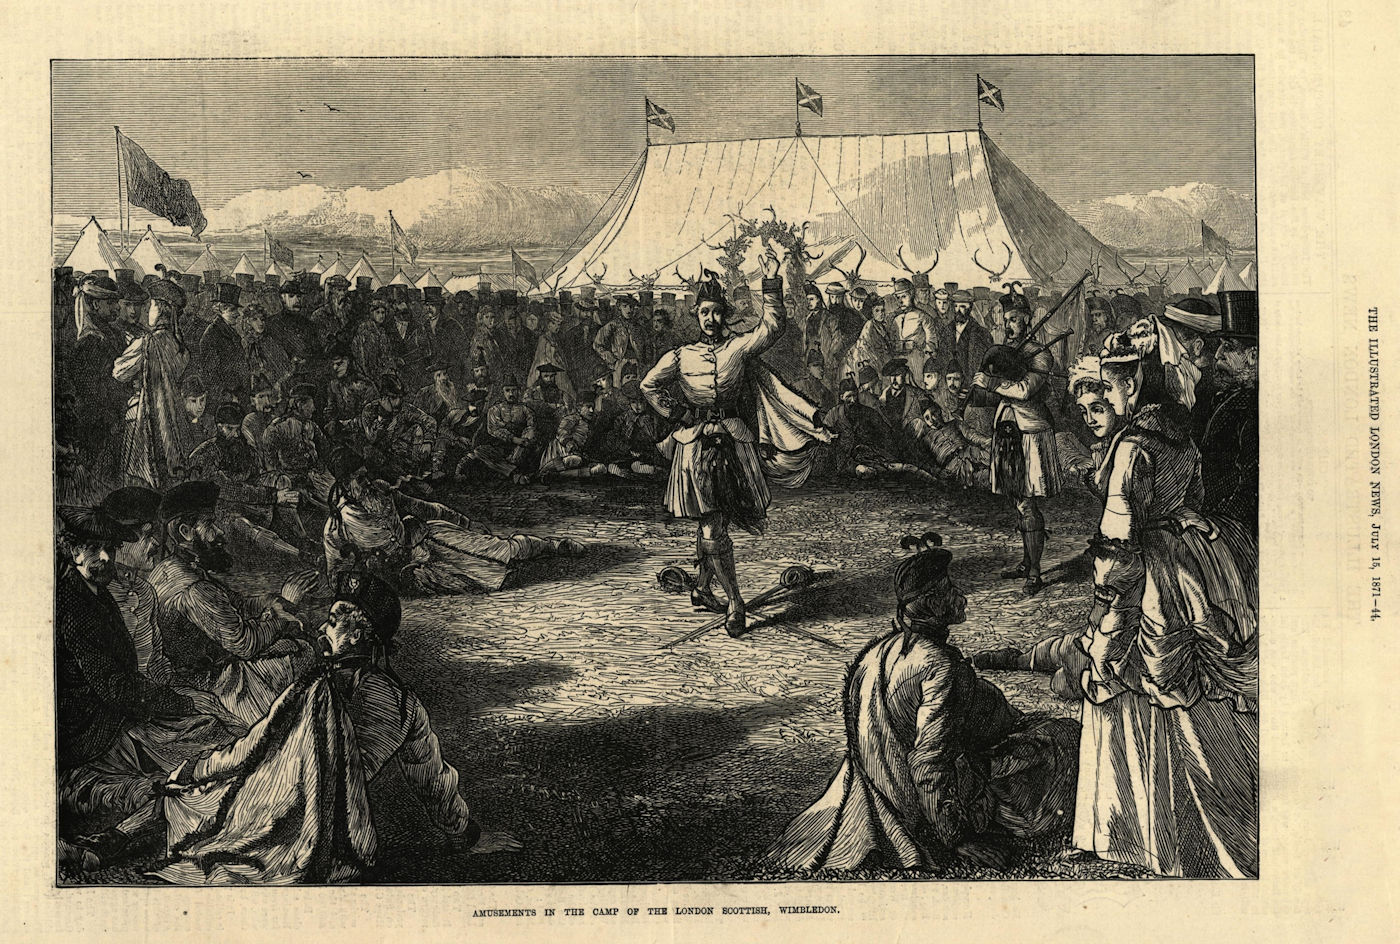 Amusements in the camp of the London Scottish, Wimbledon. Dance 1871 ILN print